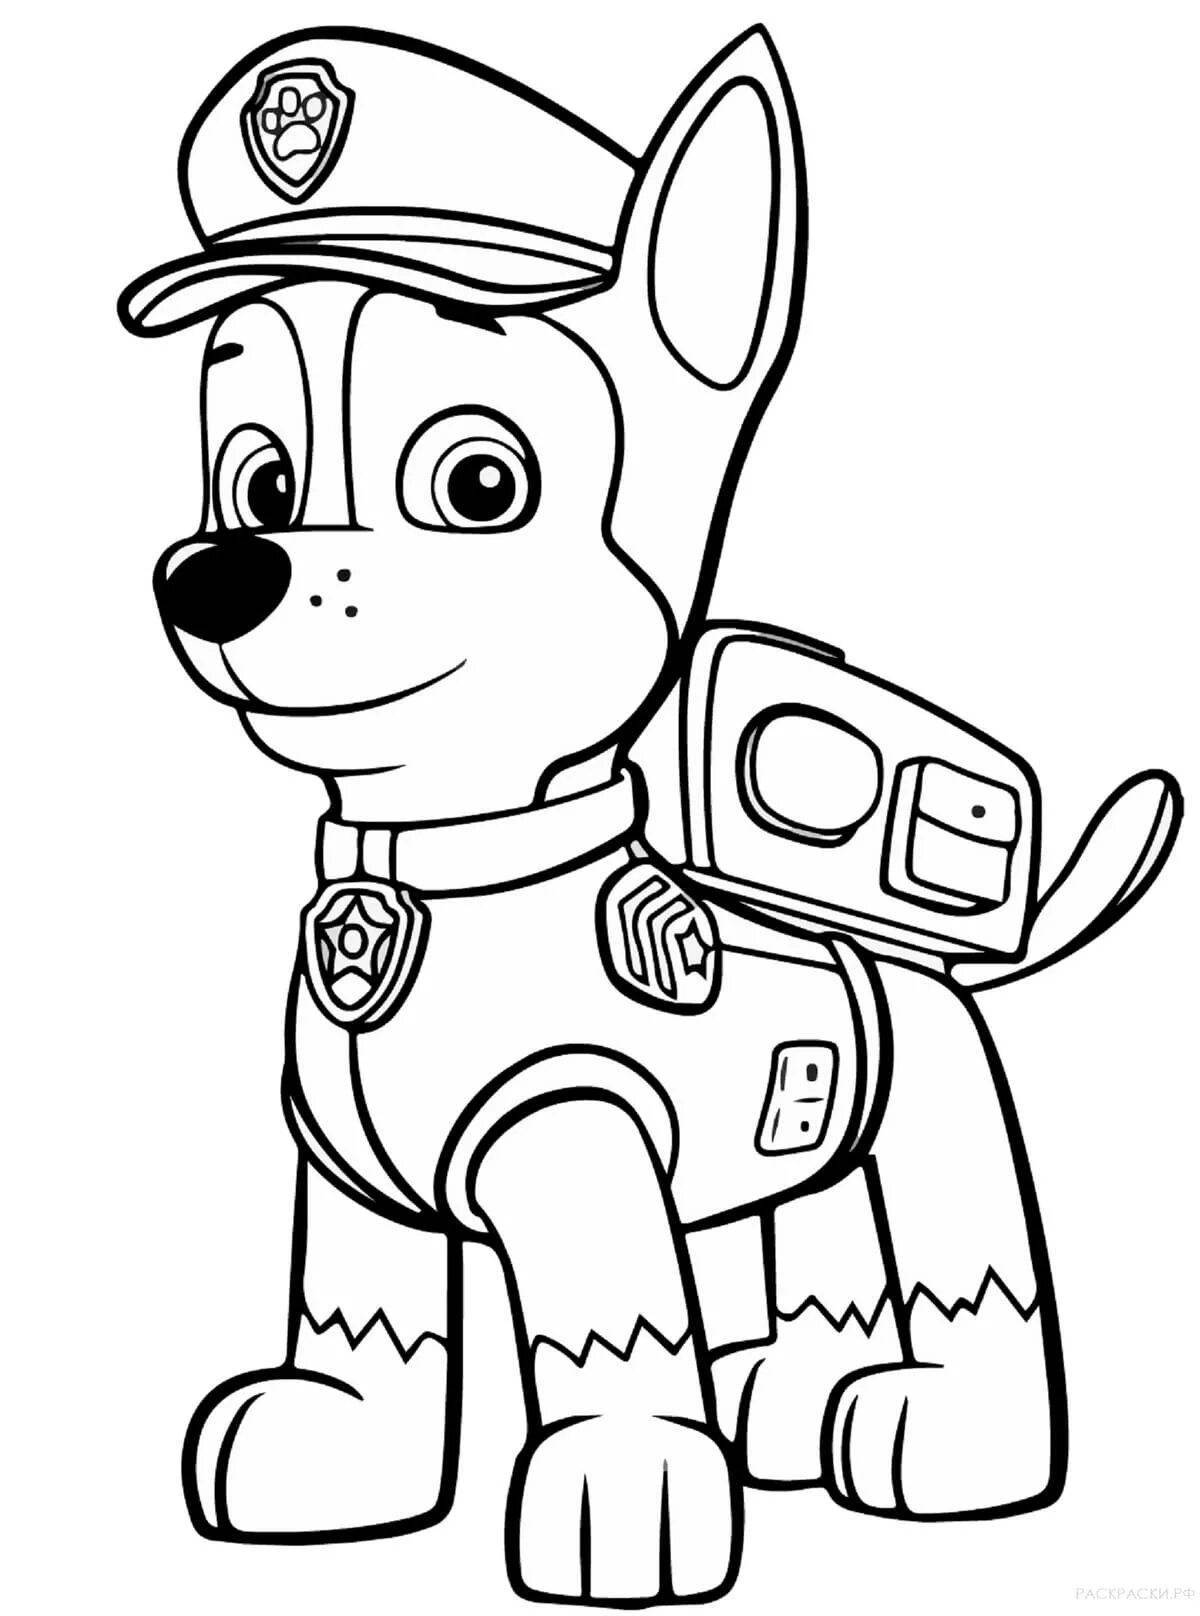 Radiant coloring page paw patrol cartoon